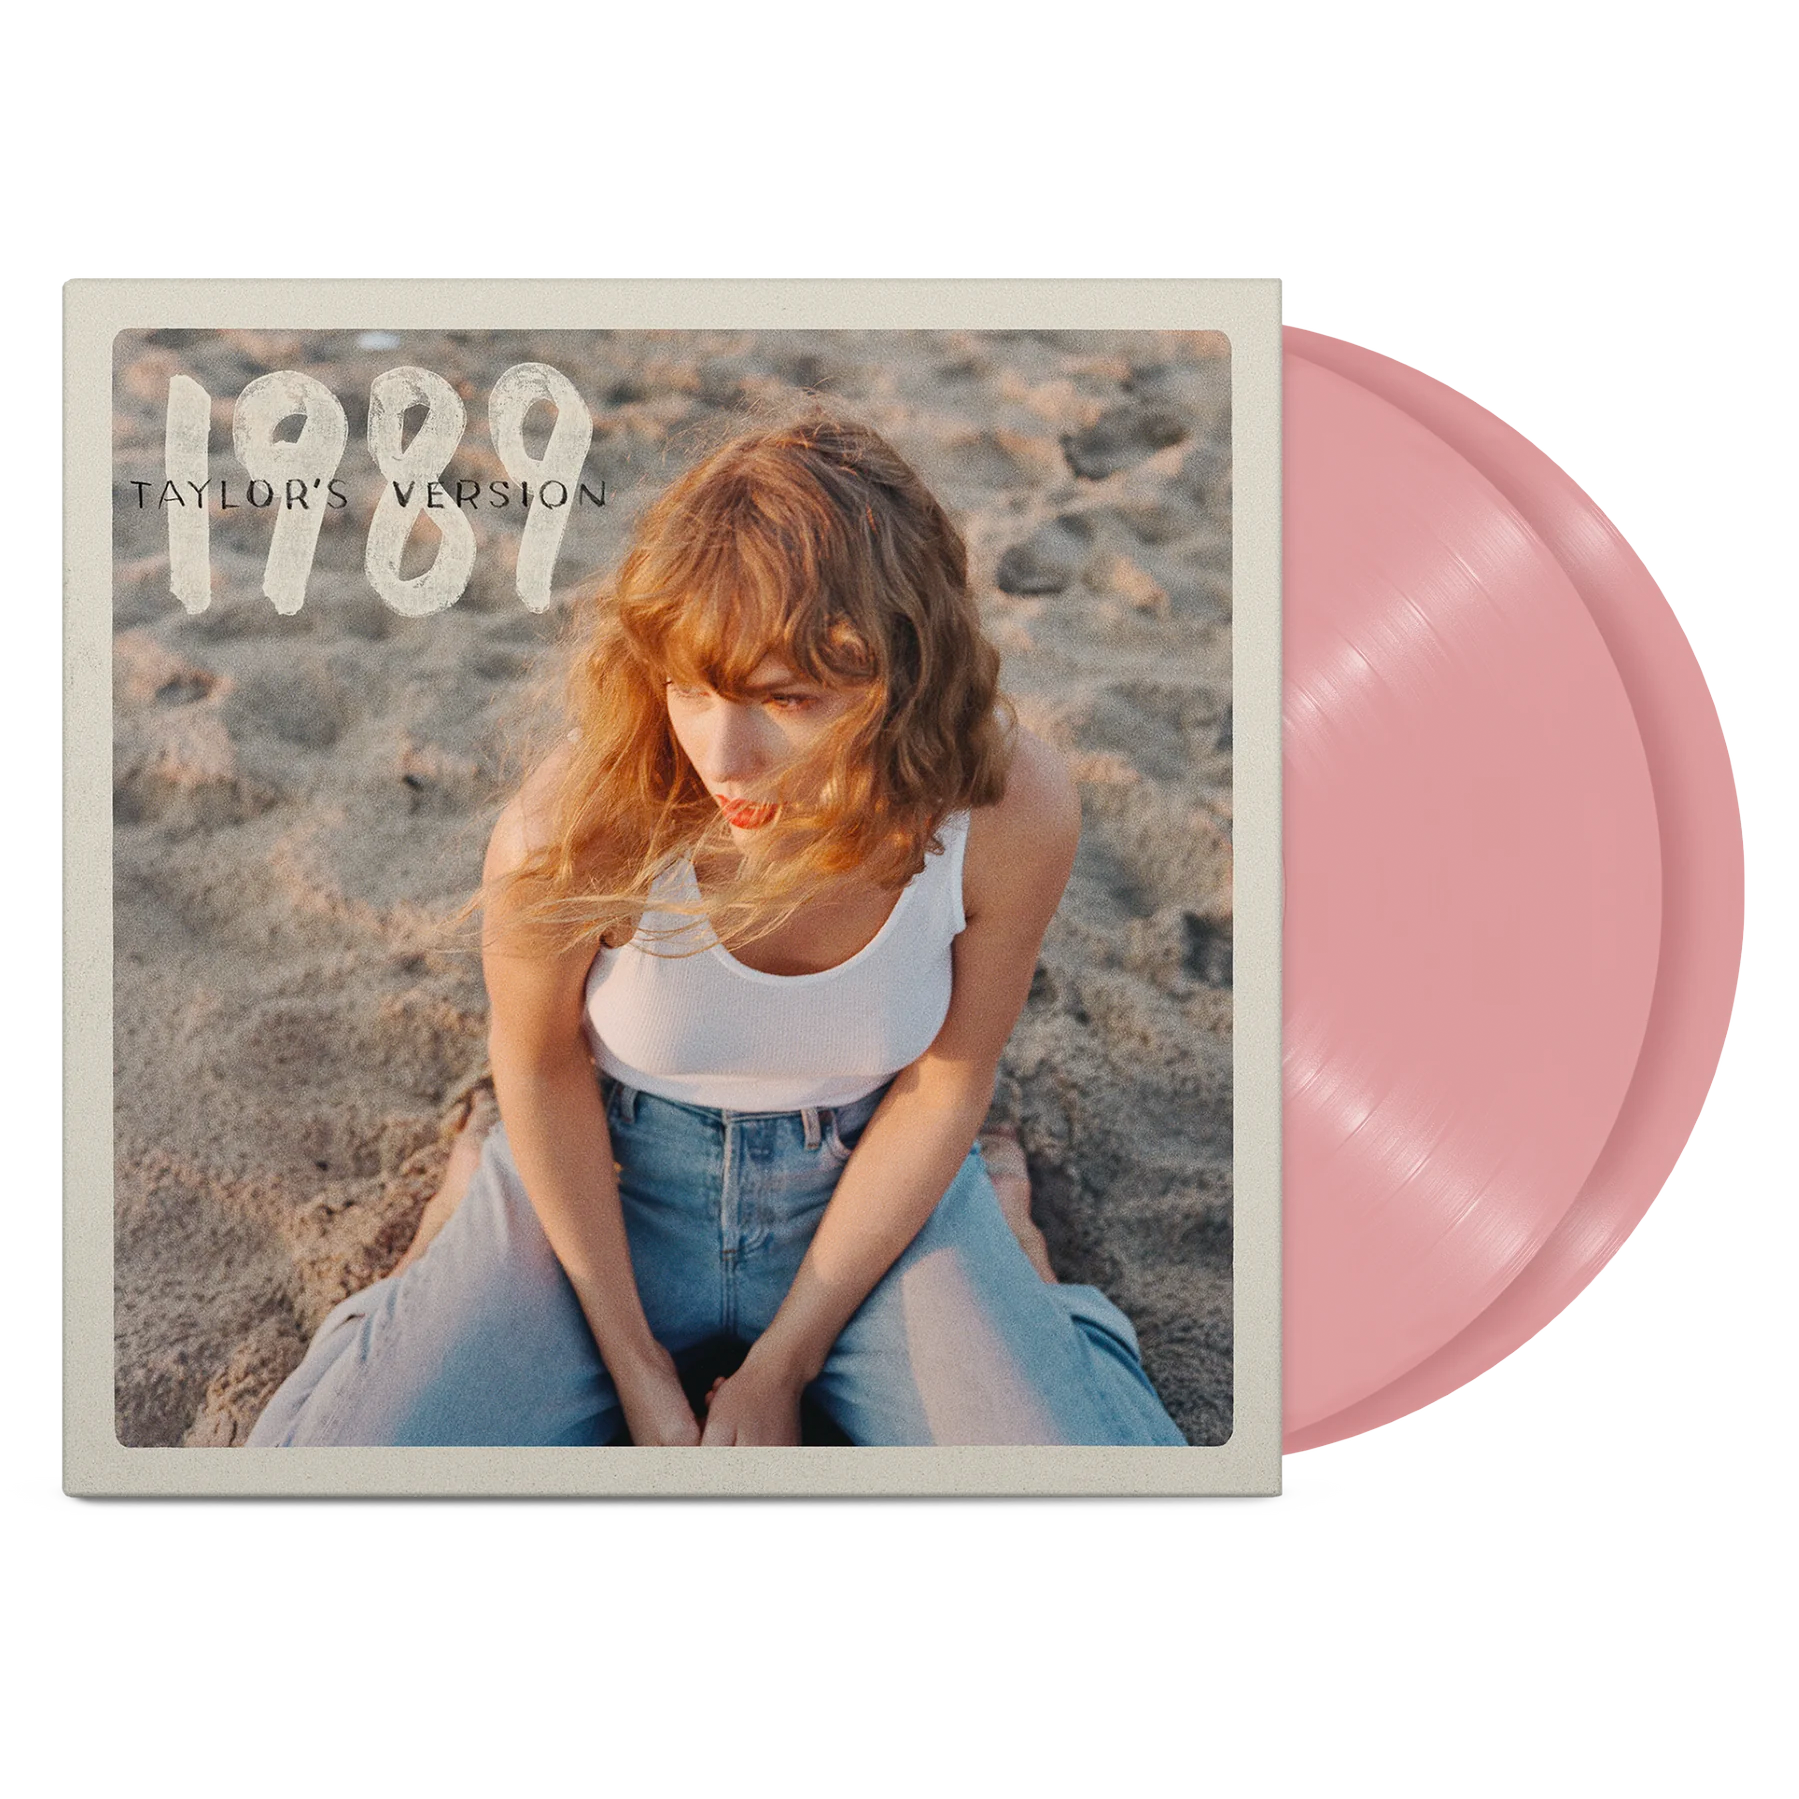 Taylor Swift - 1989 (Taylor's Version) Rose Garden Pink Edition Vinyl*